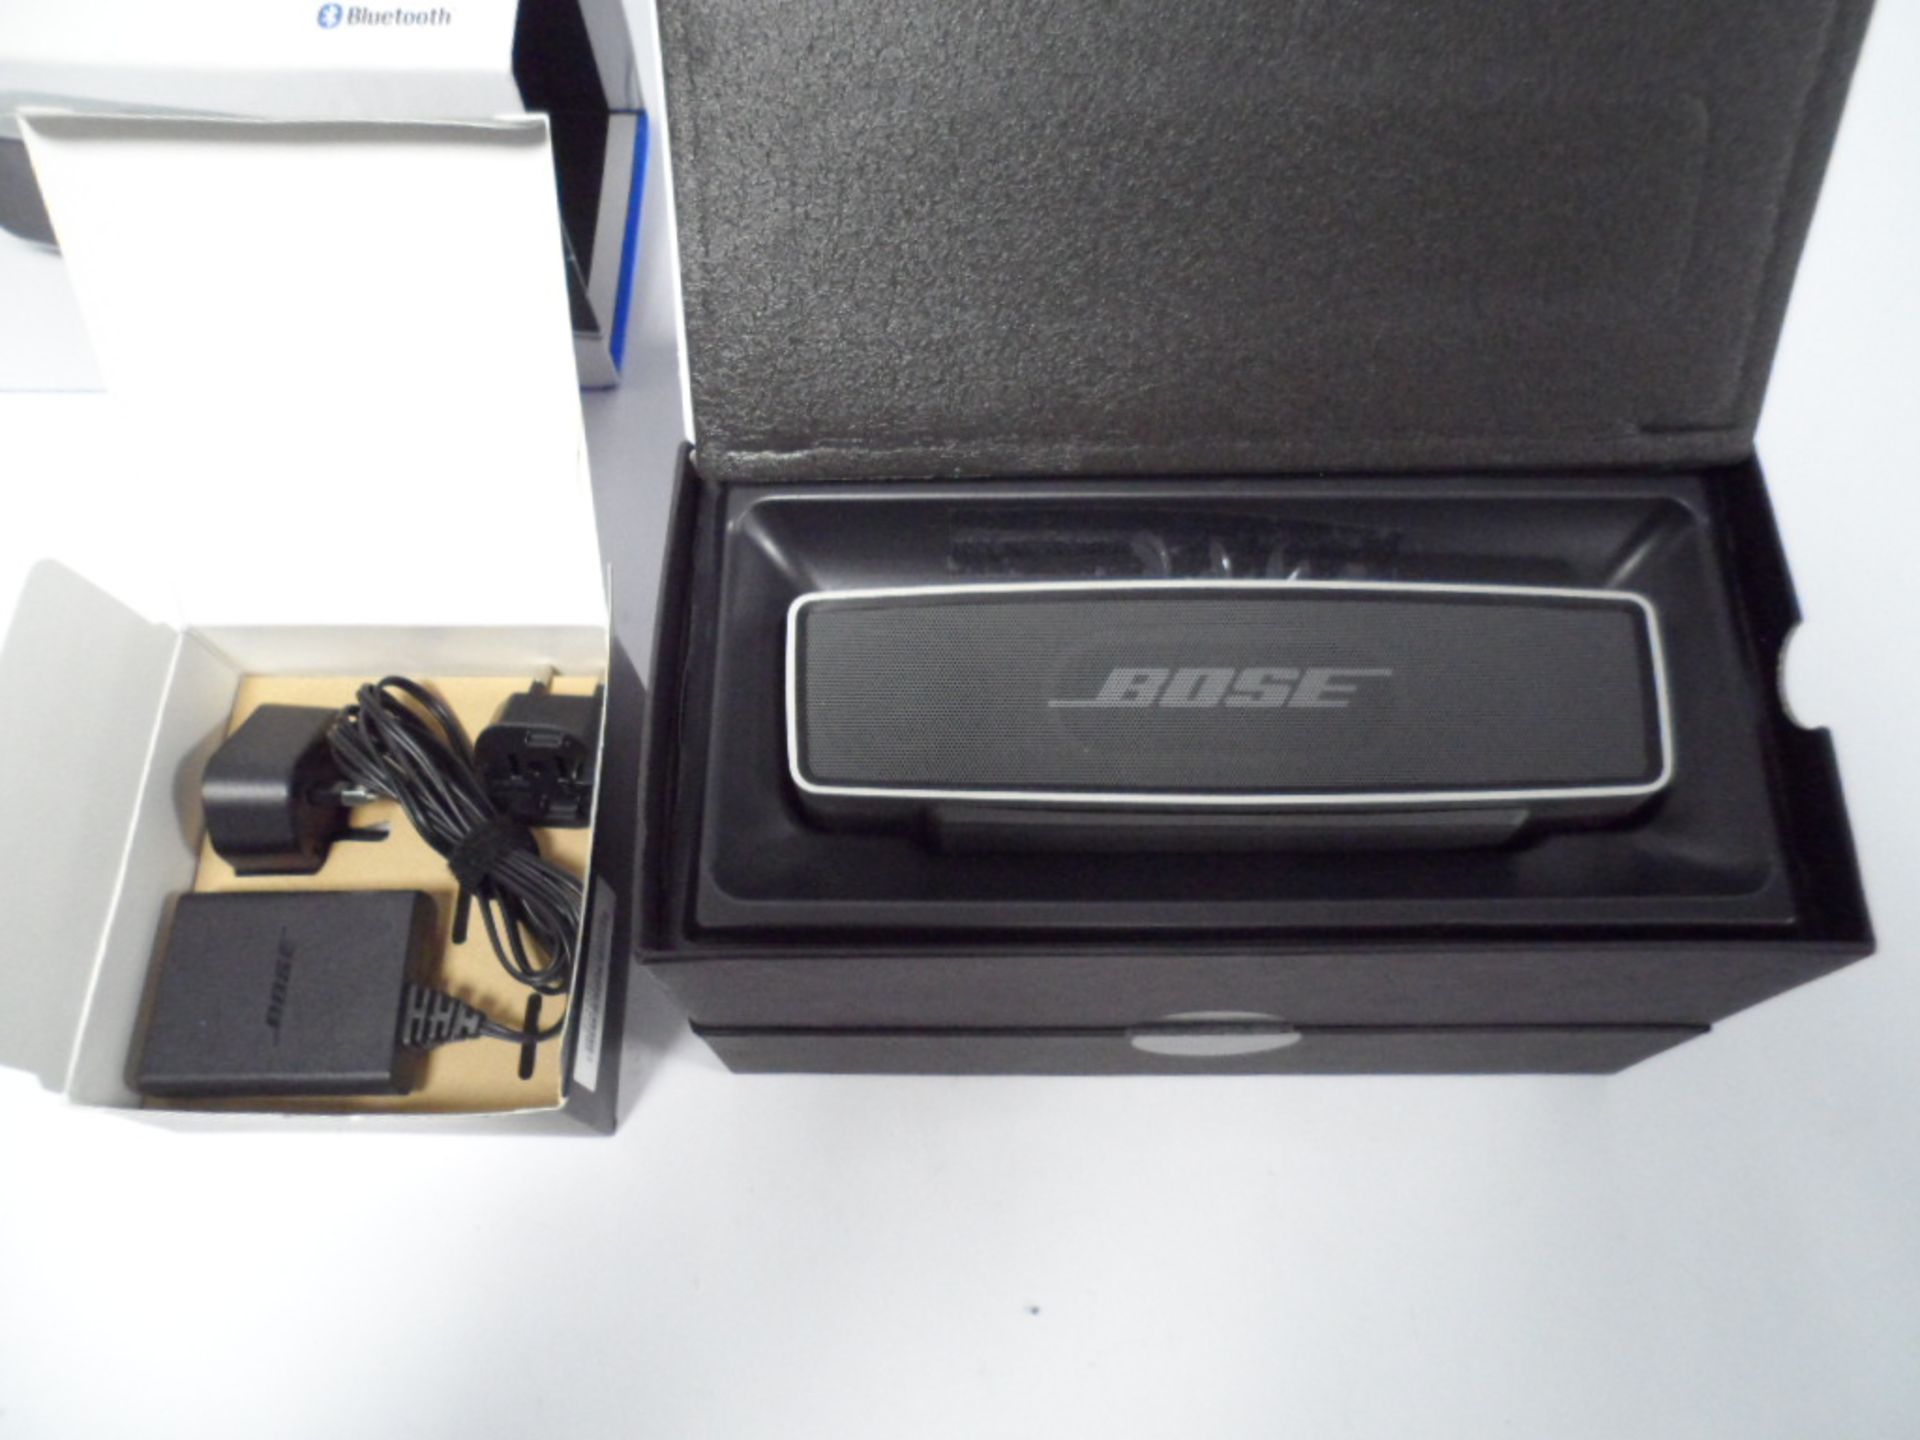 Bose Sound-link mini Speaker boxed. - Image 2 of 2